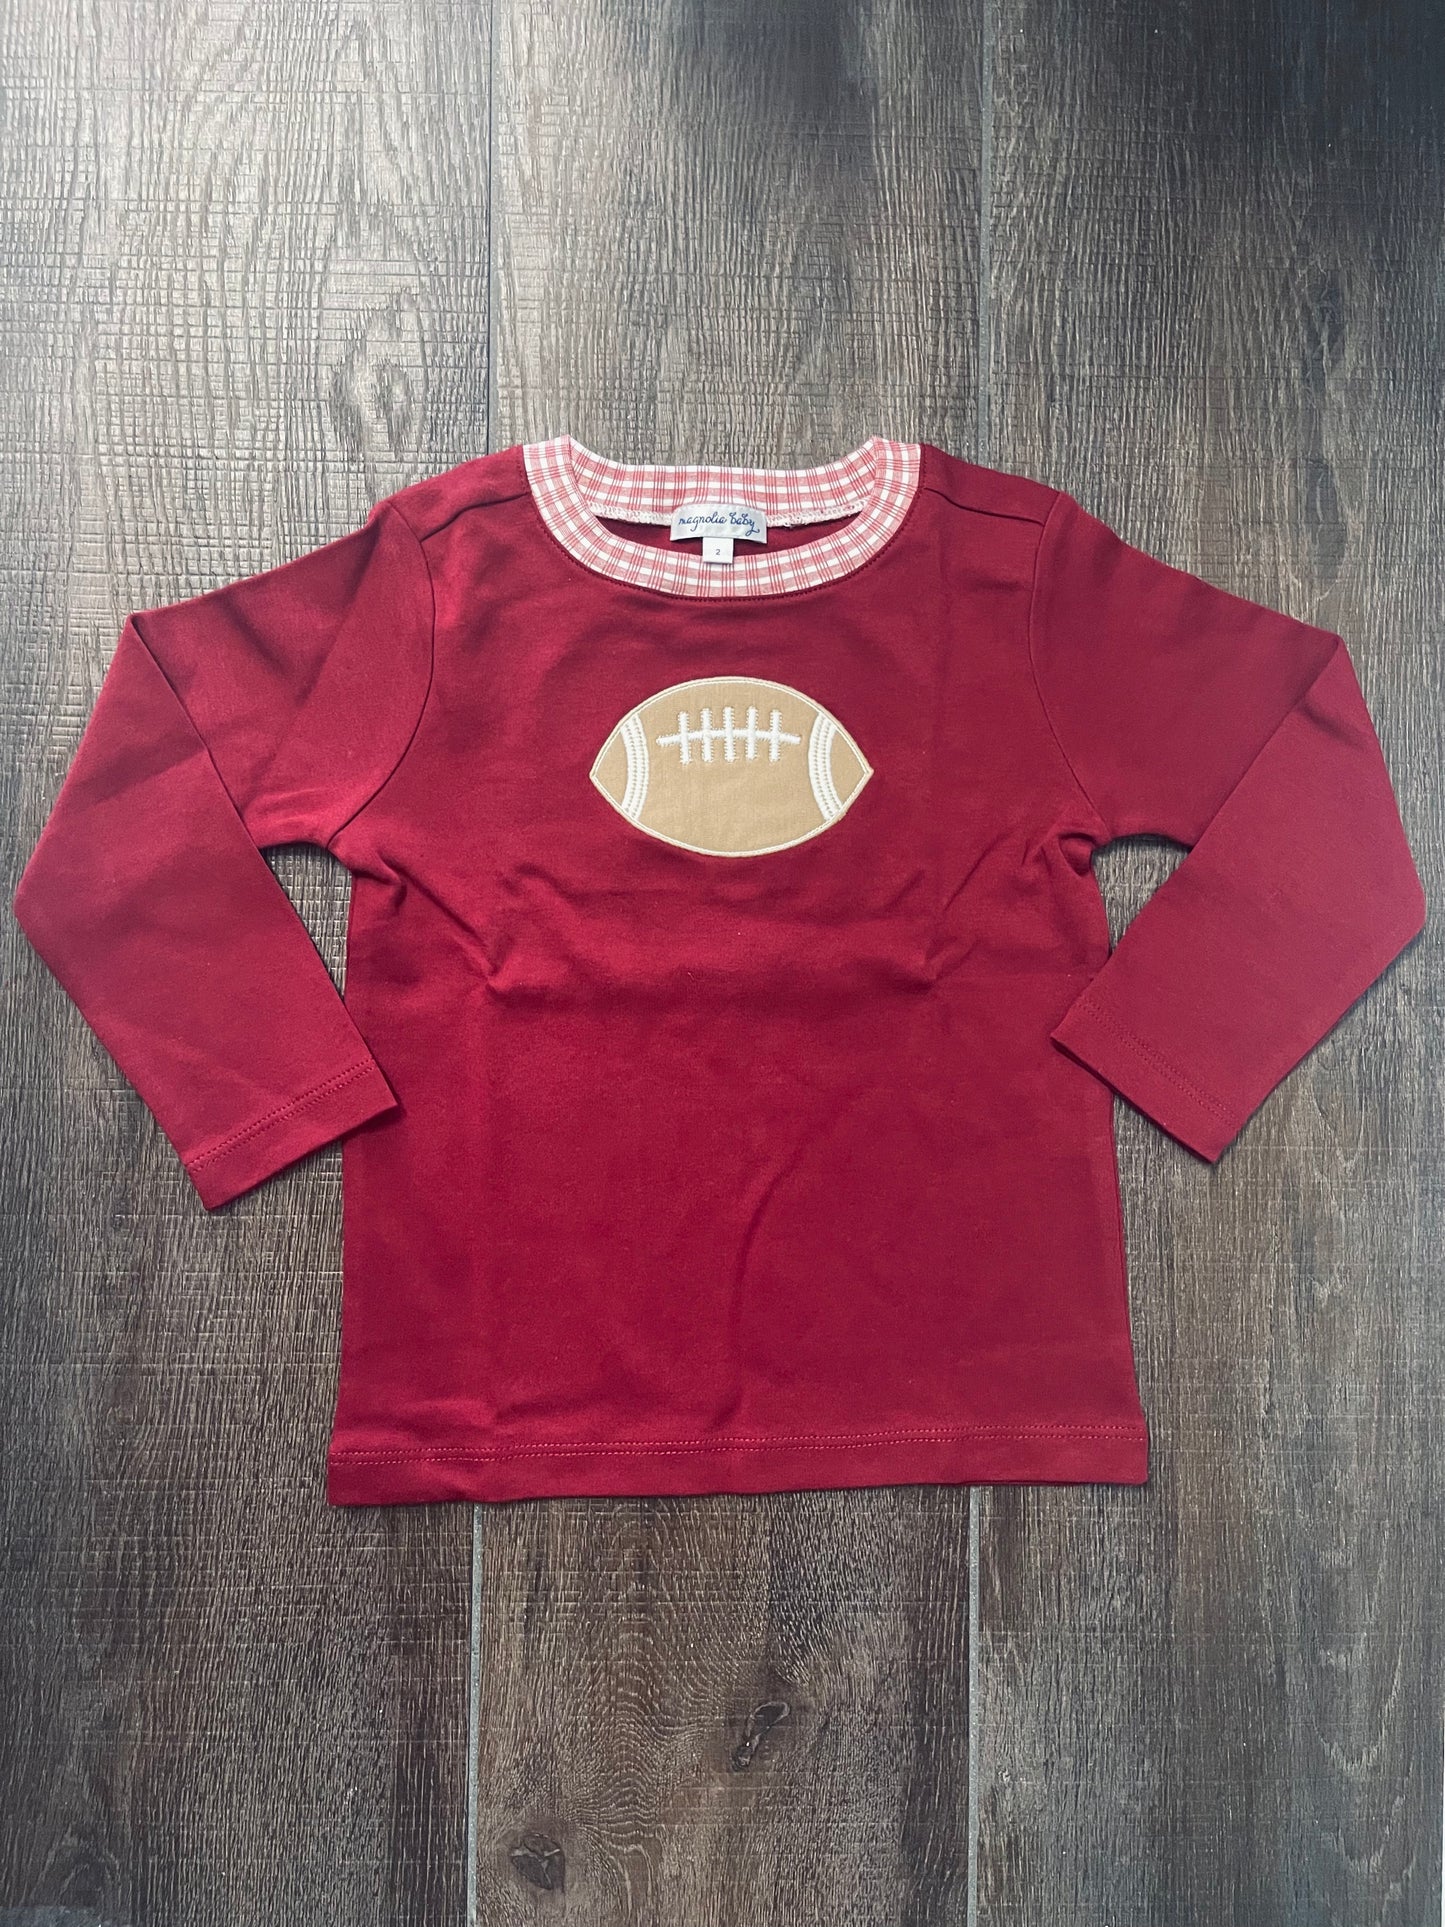 College Football Crimson T-Shirt